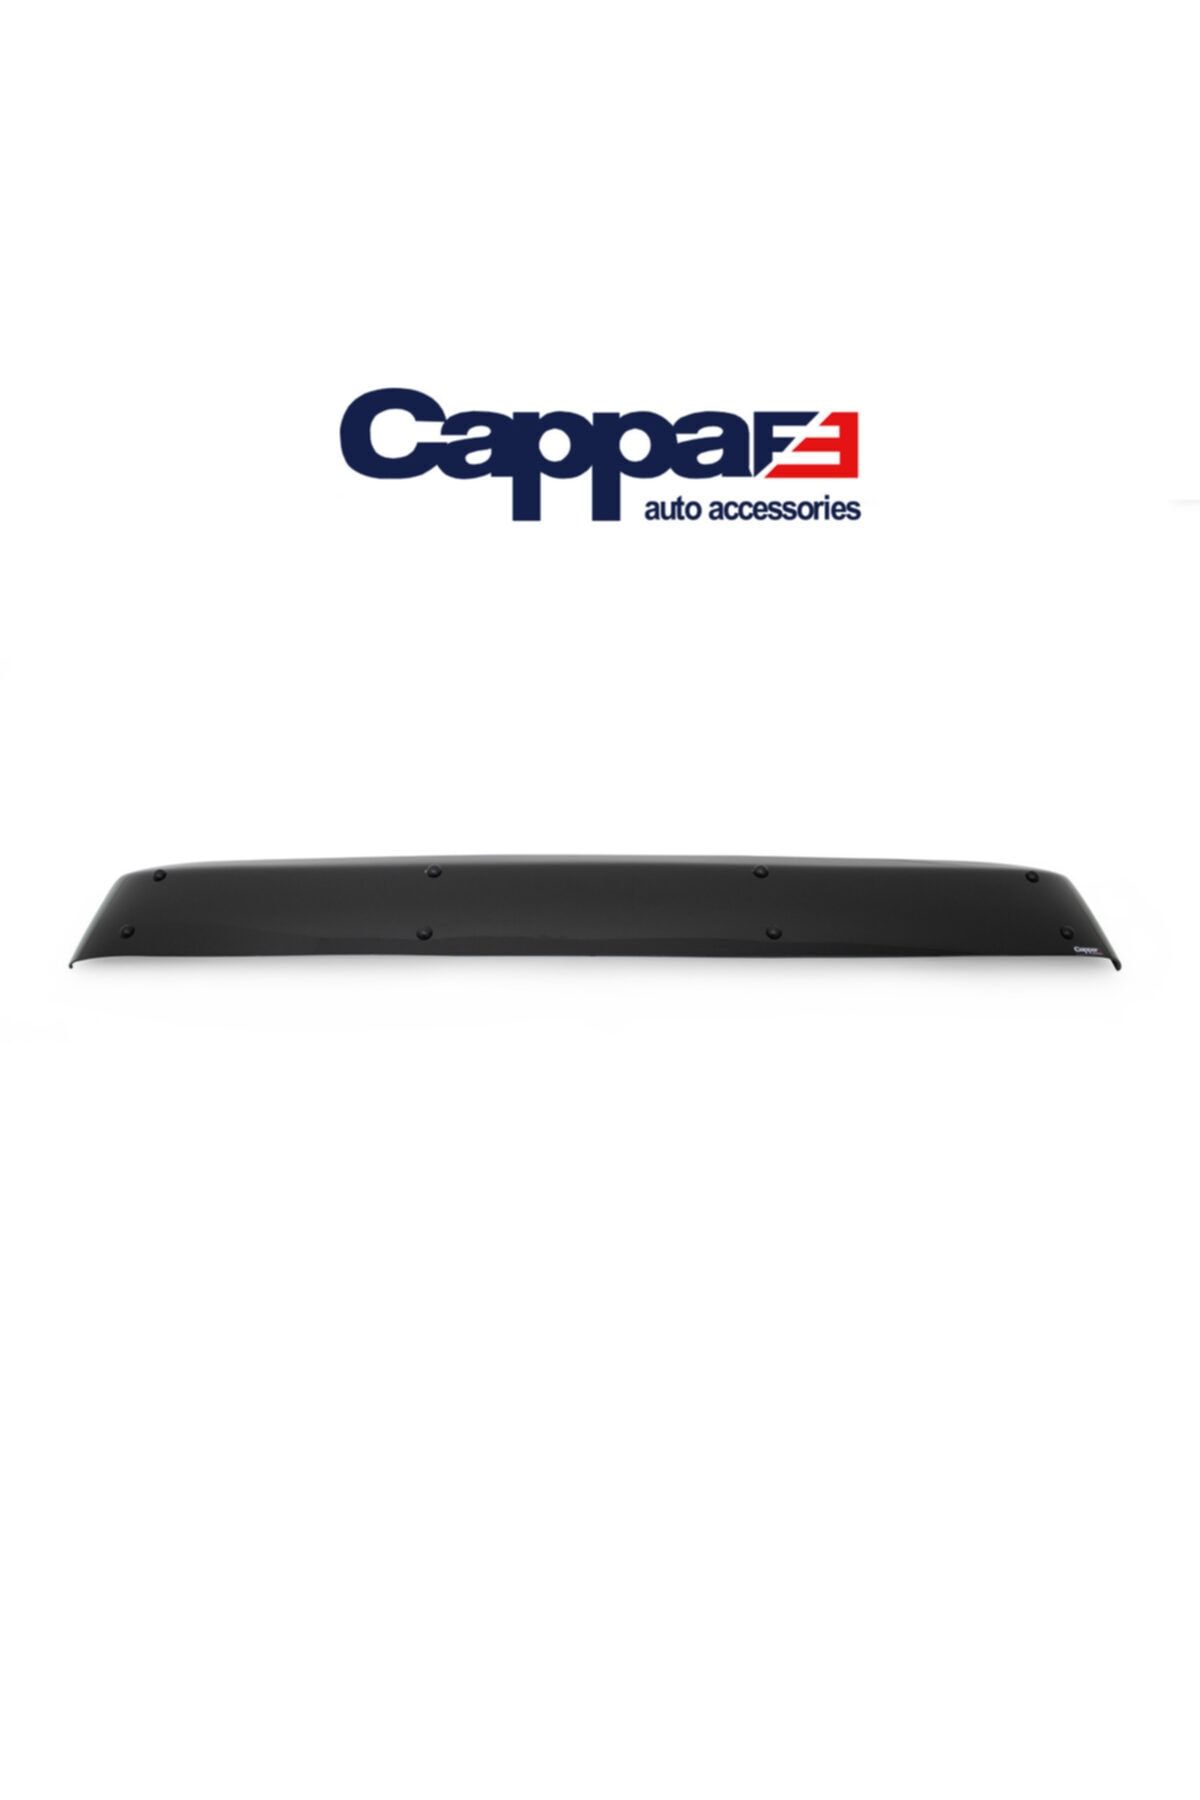 Cappafe Ford Transit Ön Cam Güneşliği Siperlik Vizör Şapka Terek Akrilik (ABS) Piano Black 2014-2018